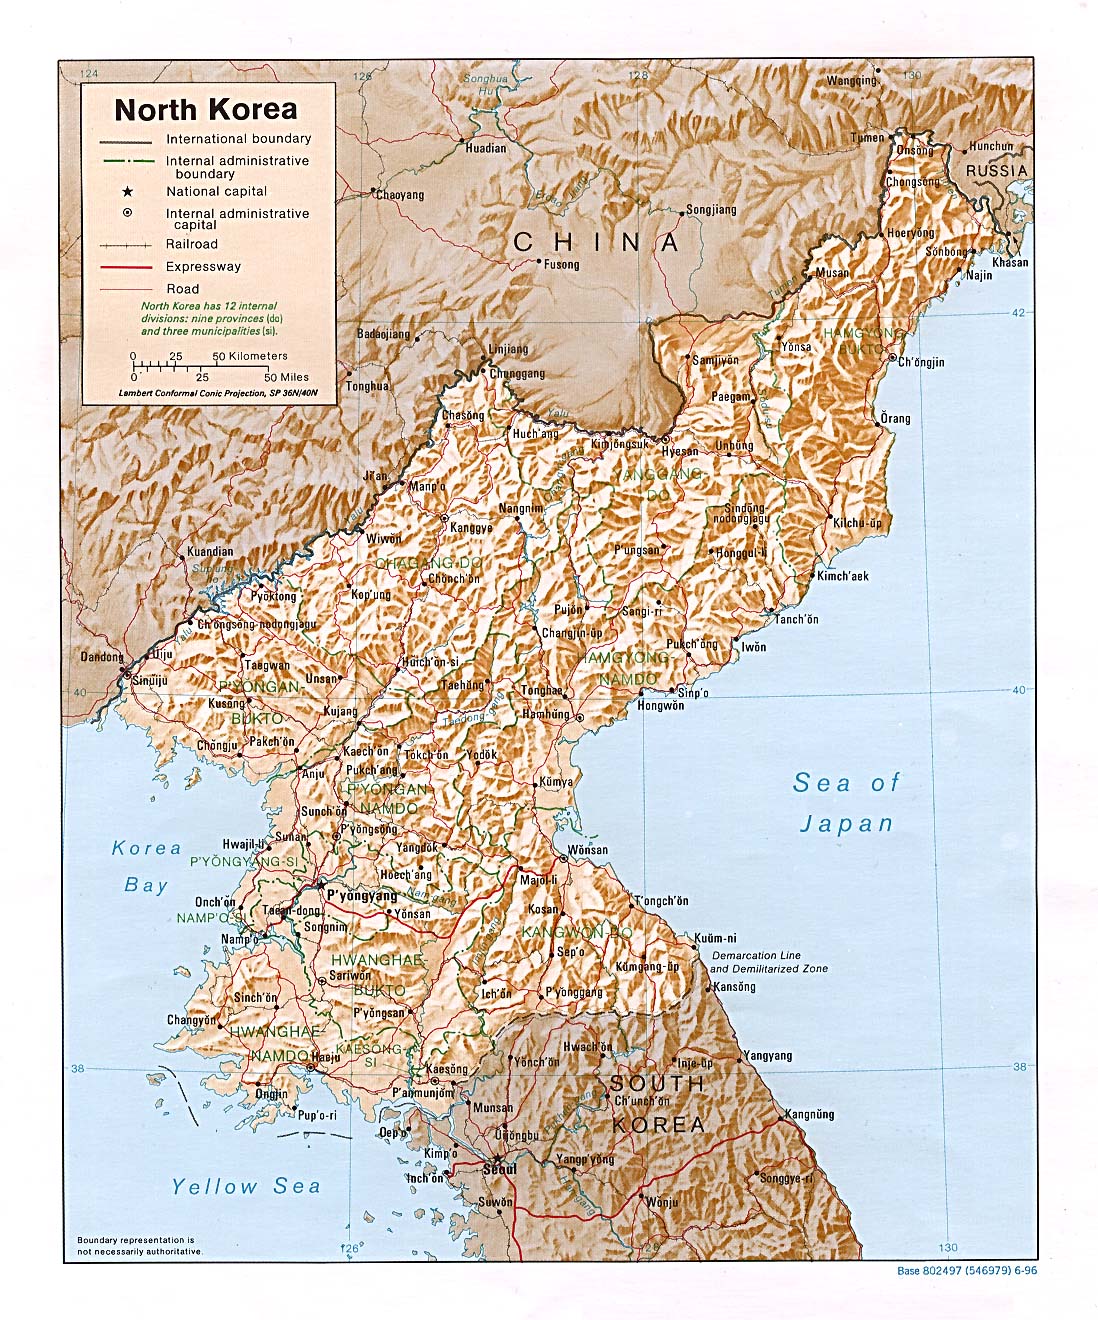 http://www.lib.utexas.edu/maps/middle_east_and_asia/north_korea_rel96.jpg